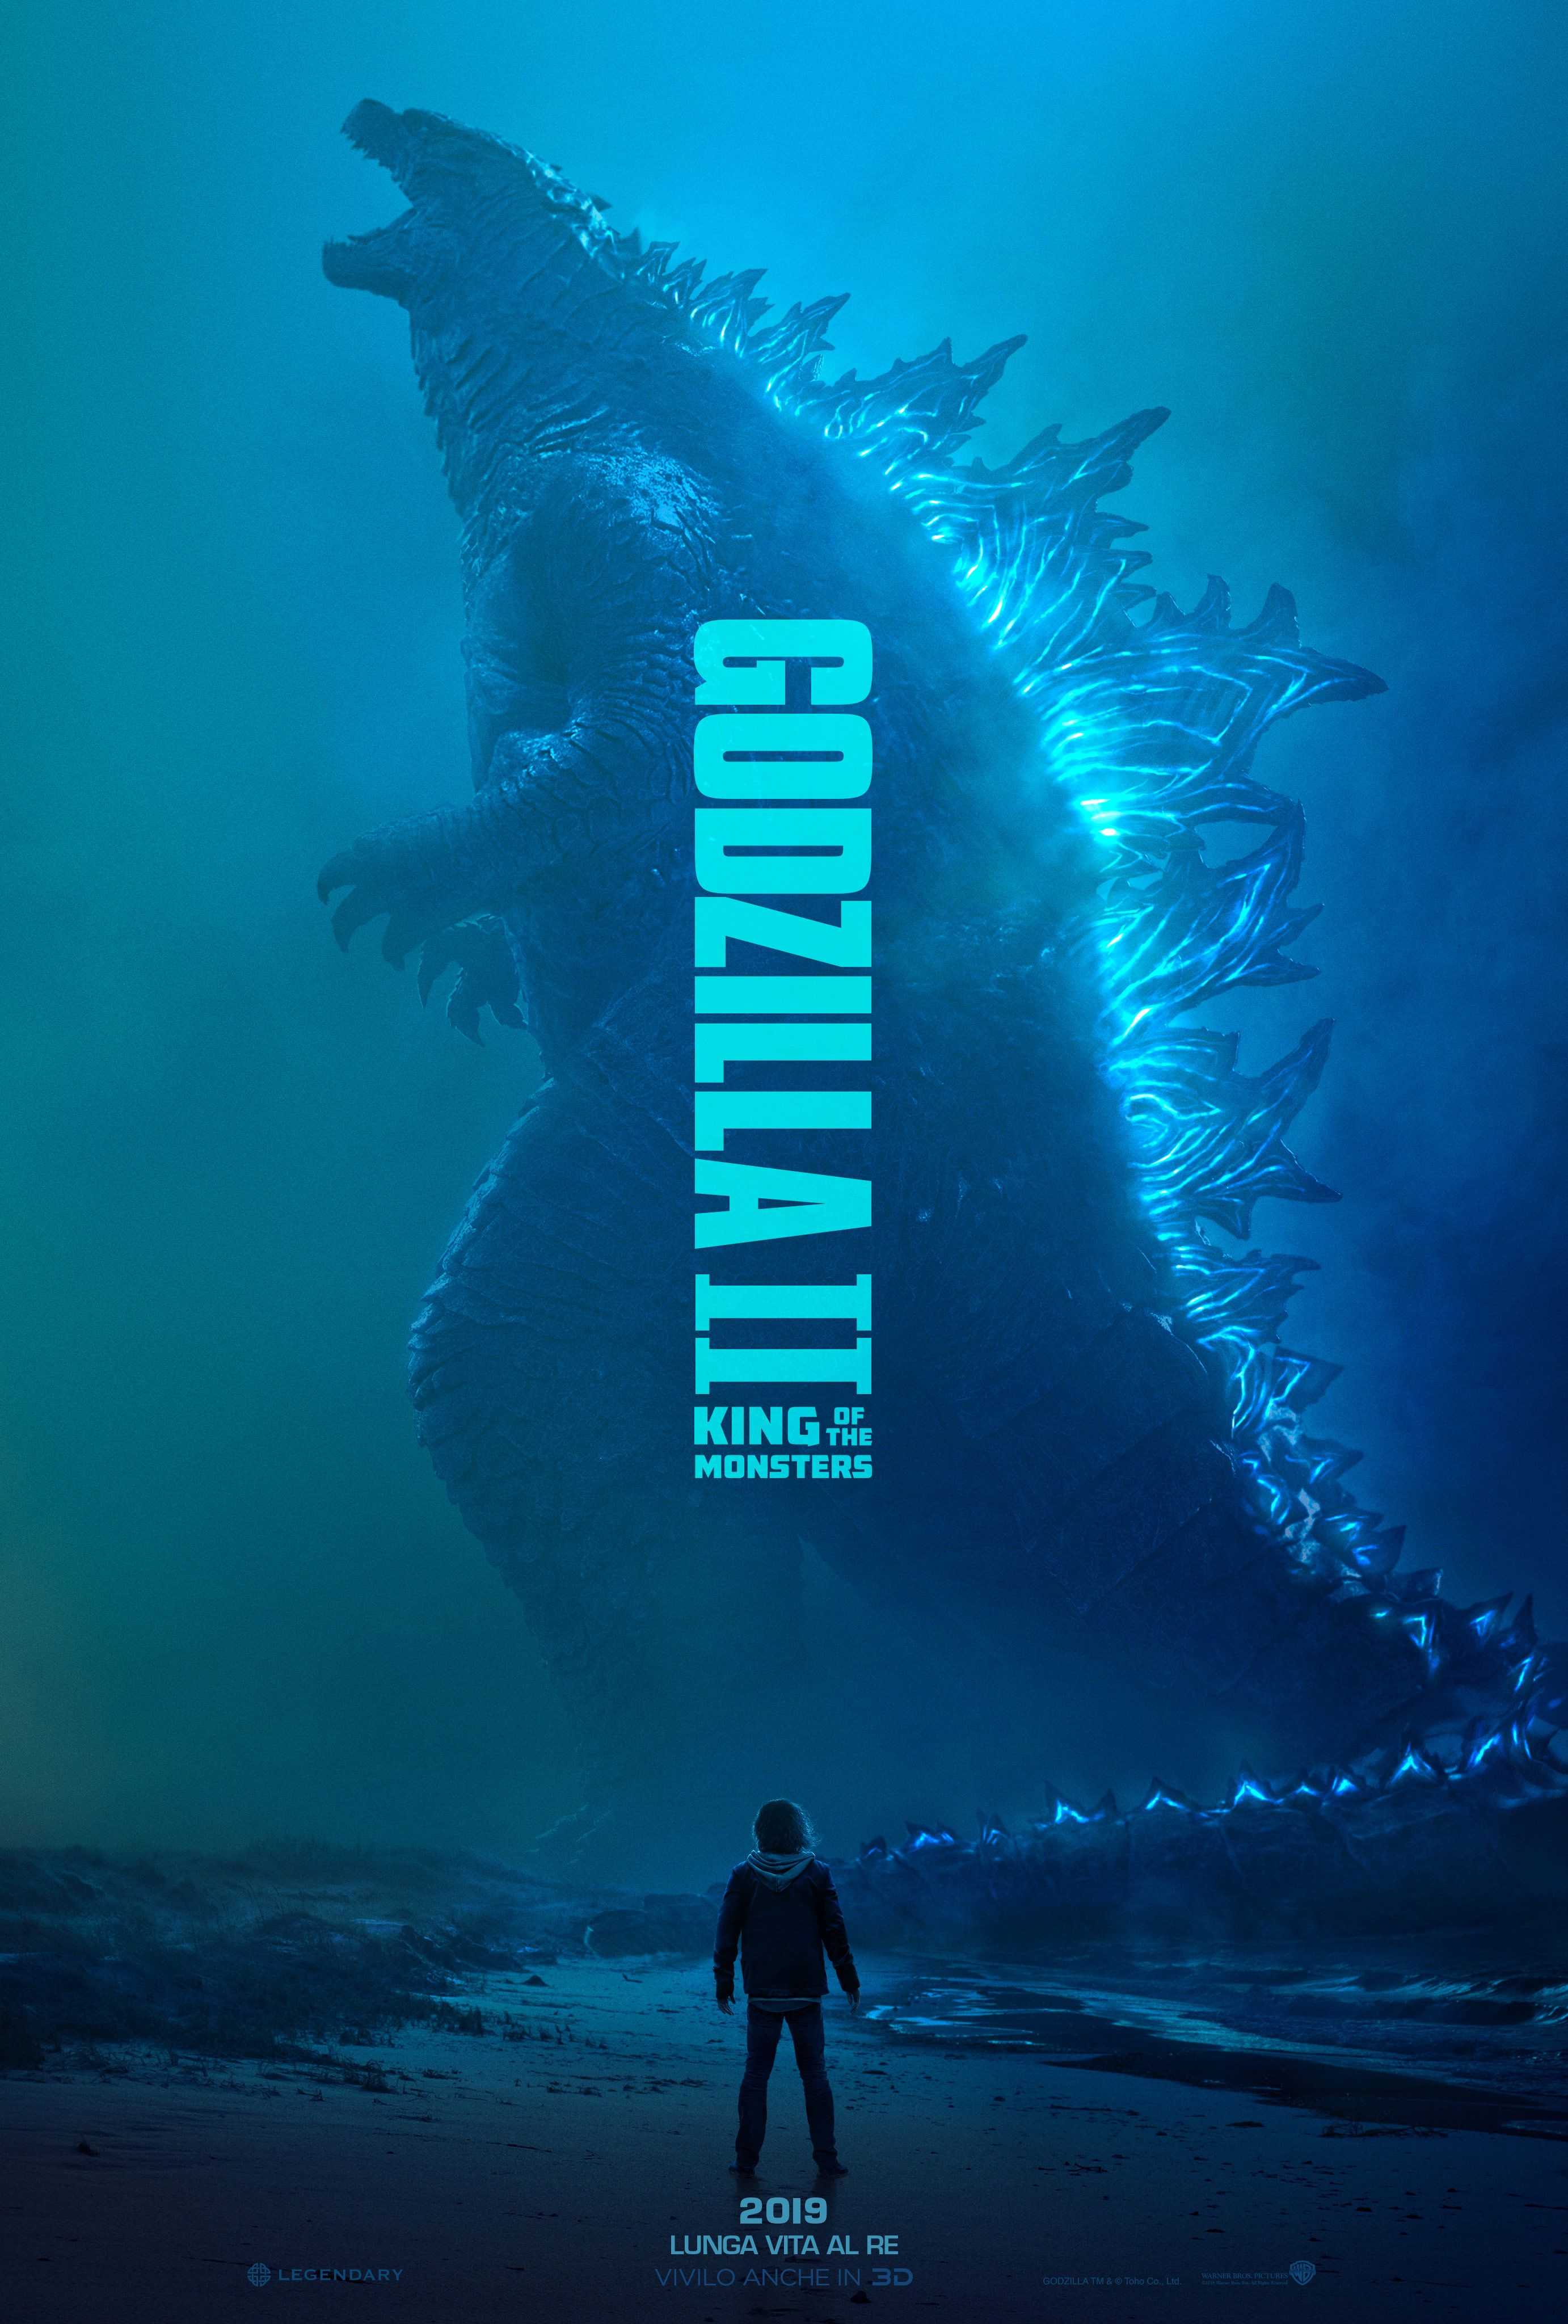 Godzilla 2019 Wallpaper Free .wallpaperaccess.com